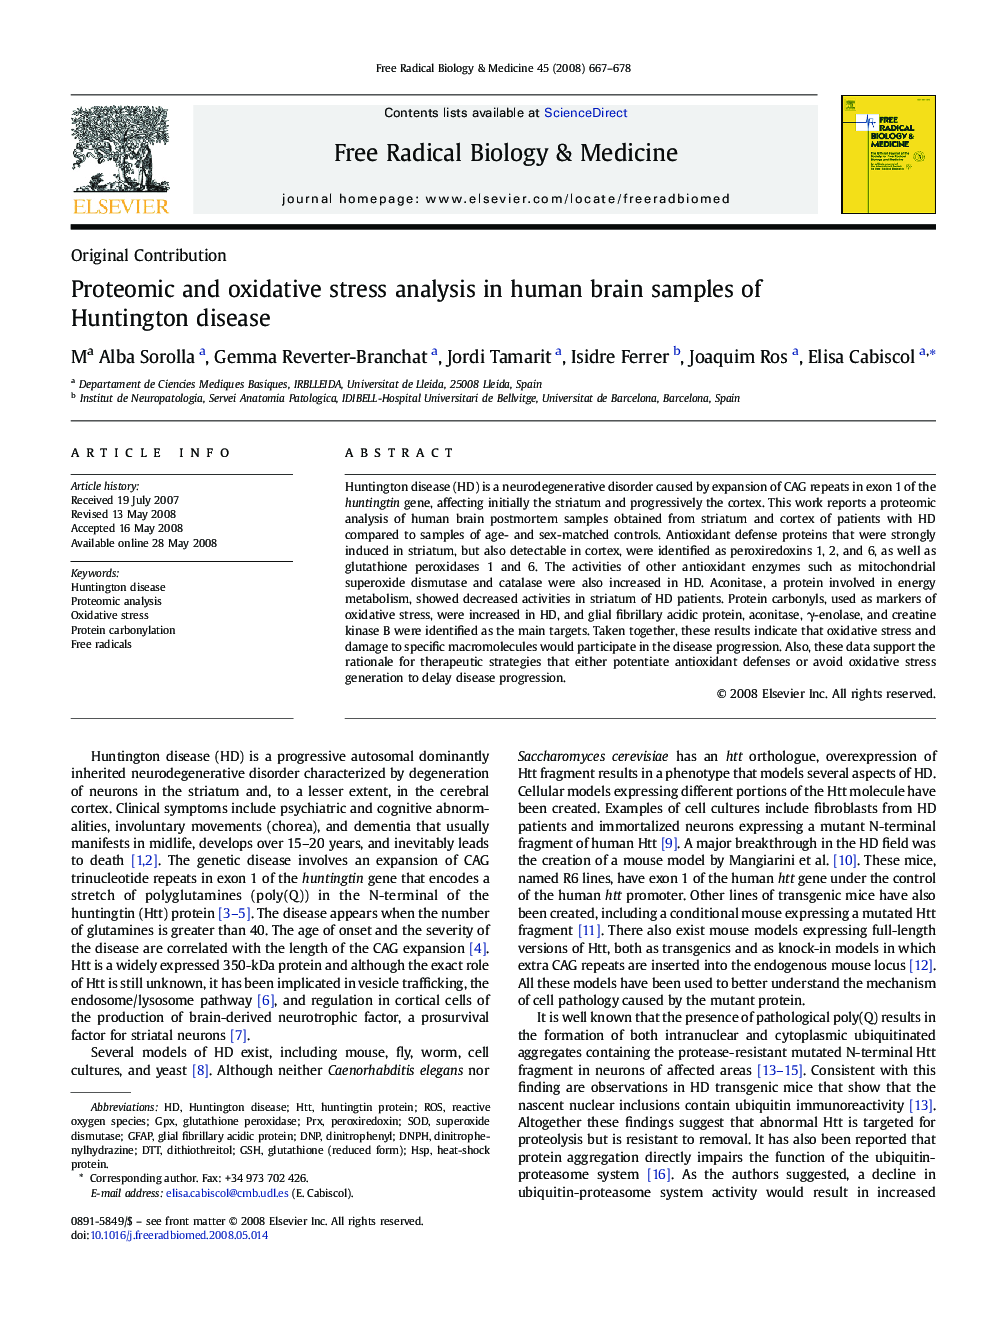 Proteomic and oxidative stress analysis in human brain samples of Huntington disease